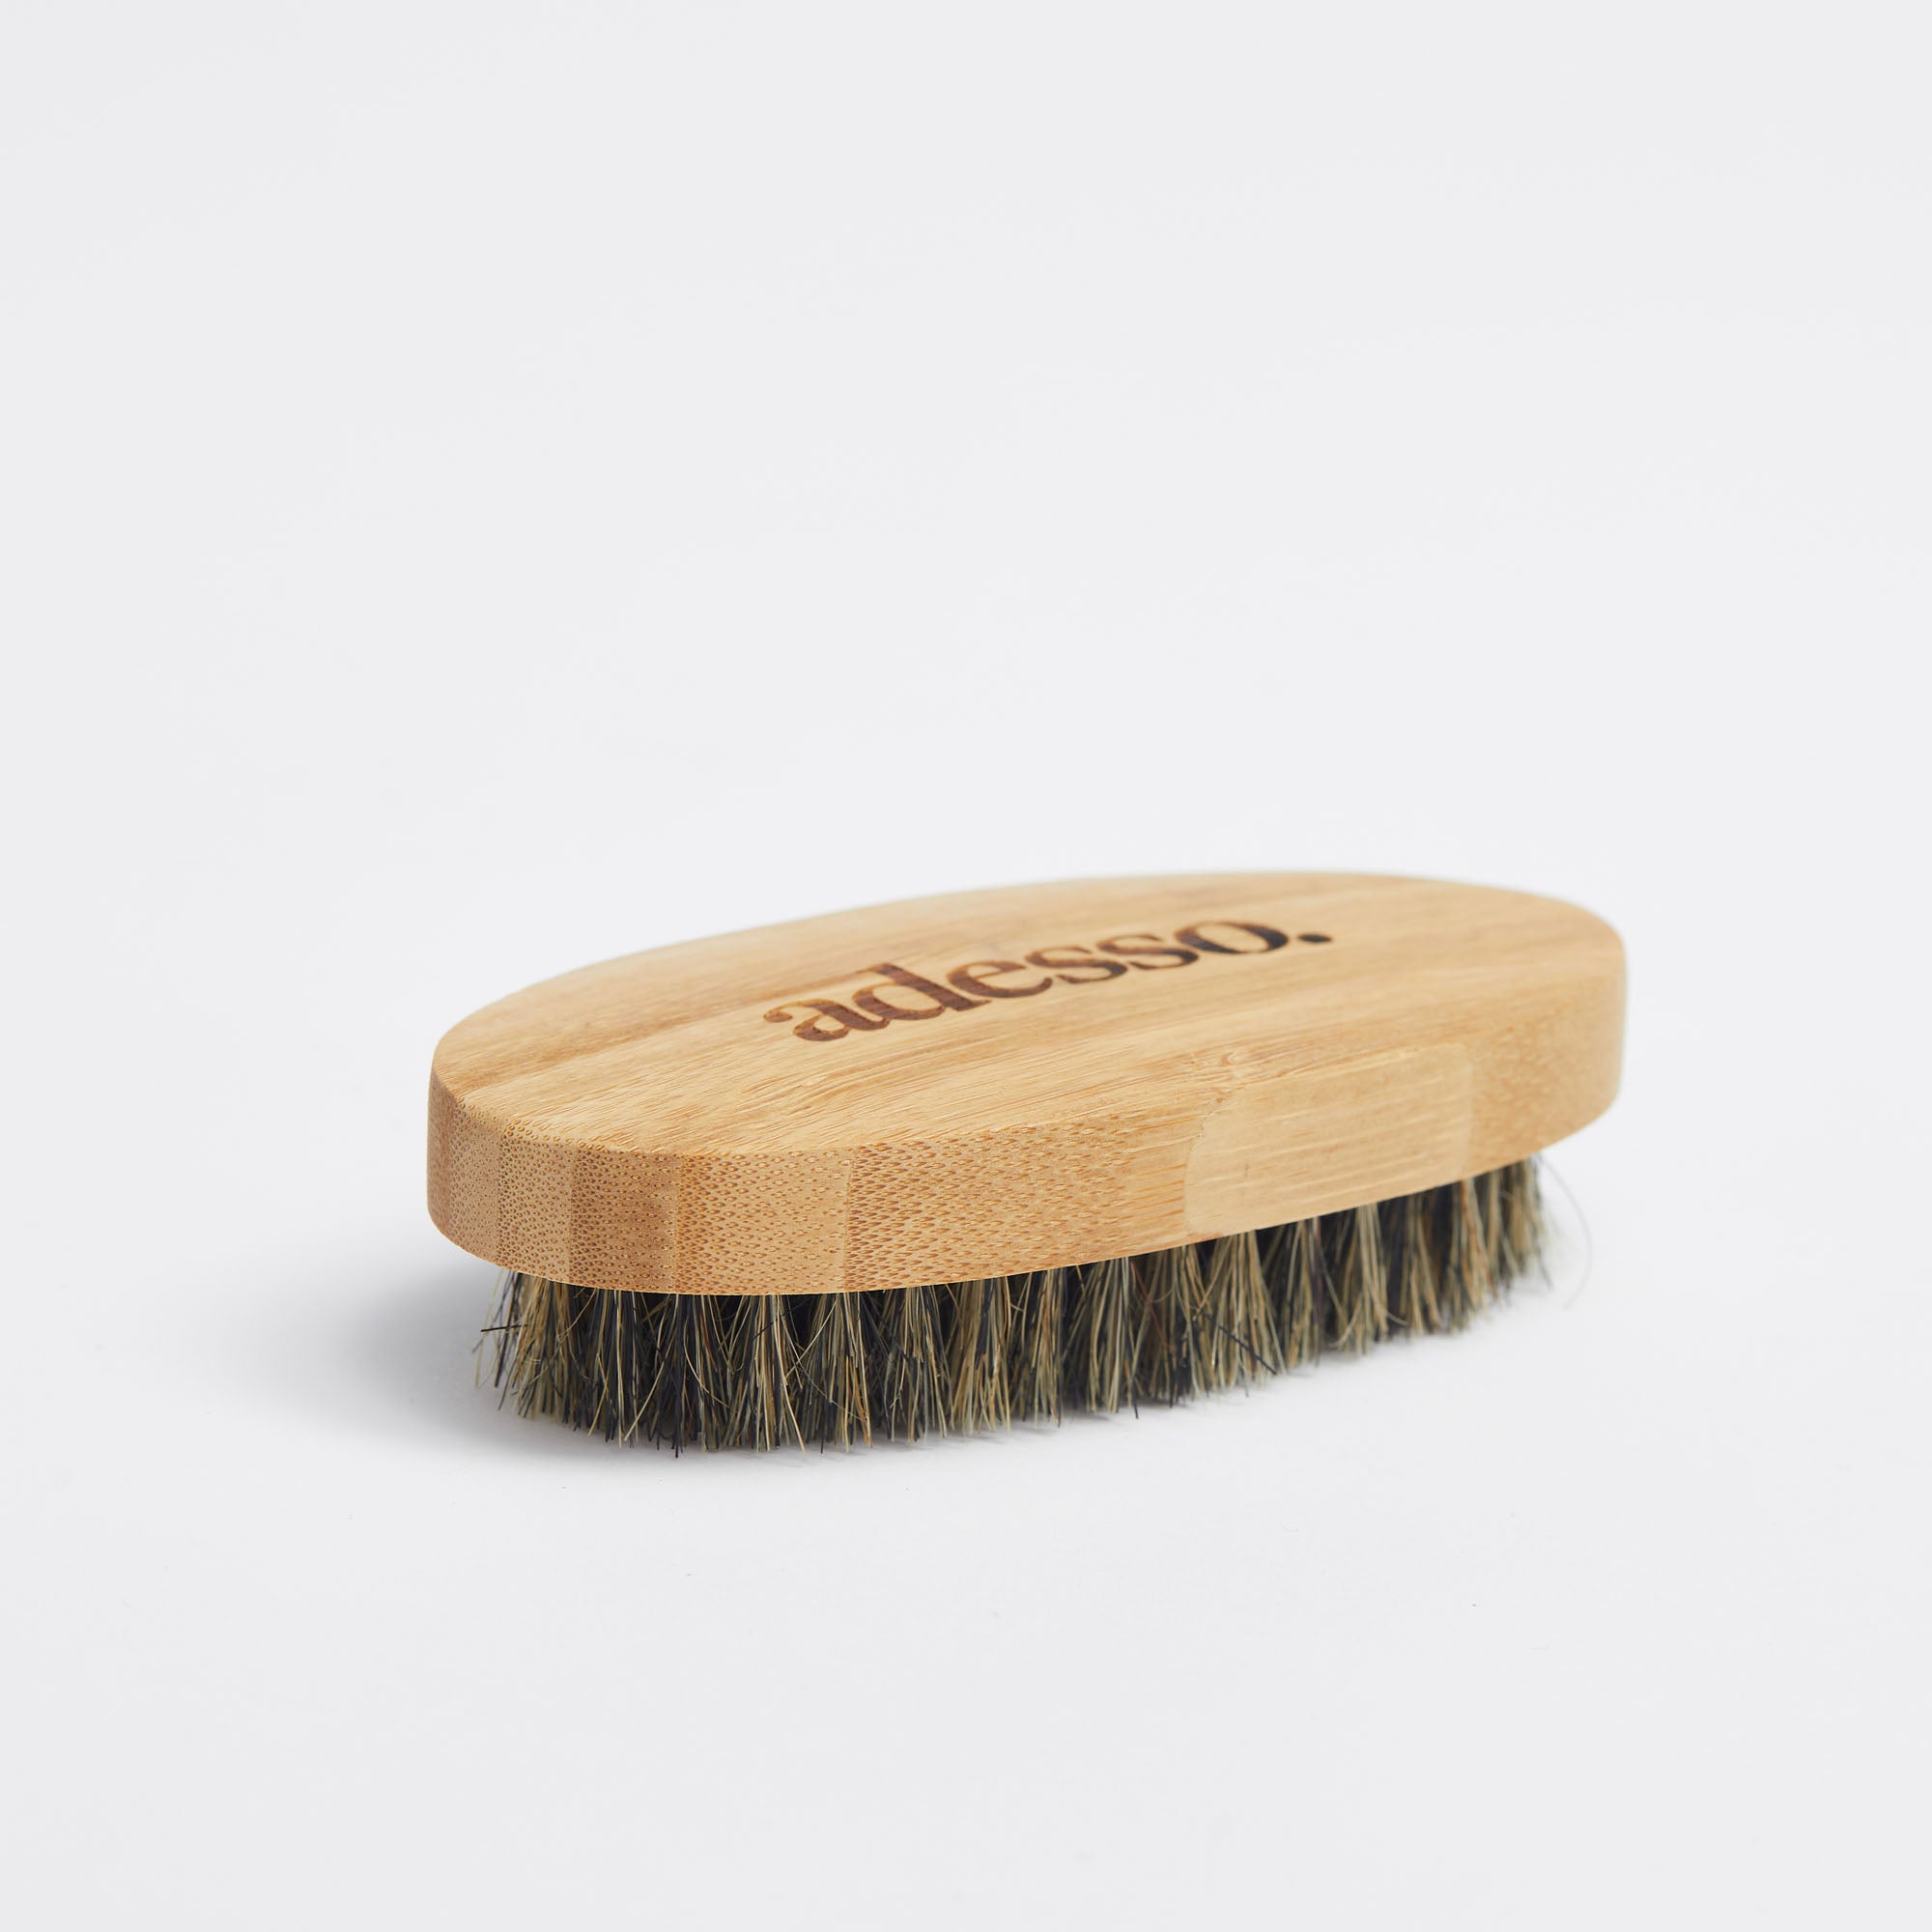 Adesso Beard Brush - Bamboo